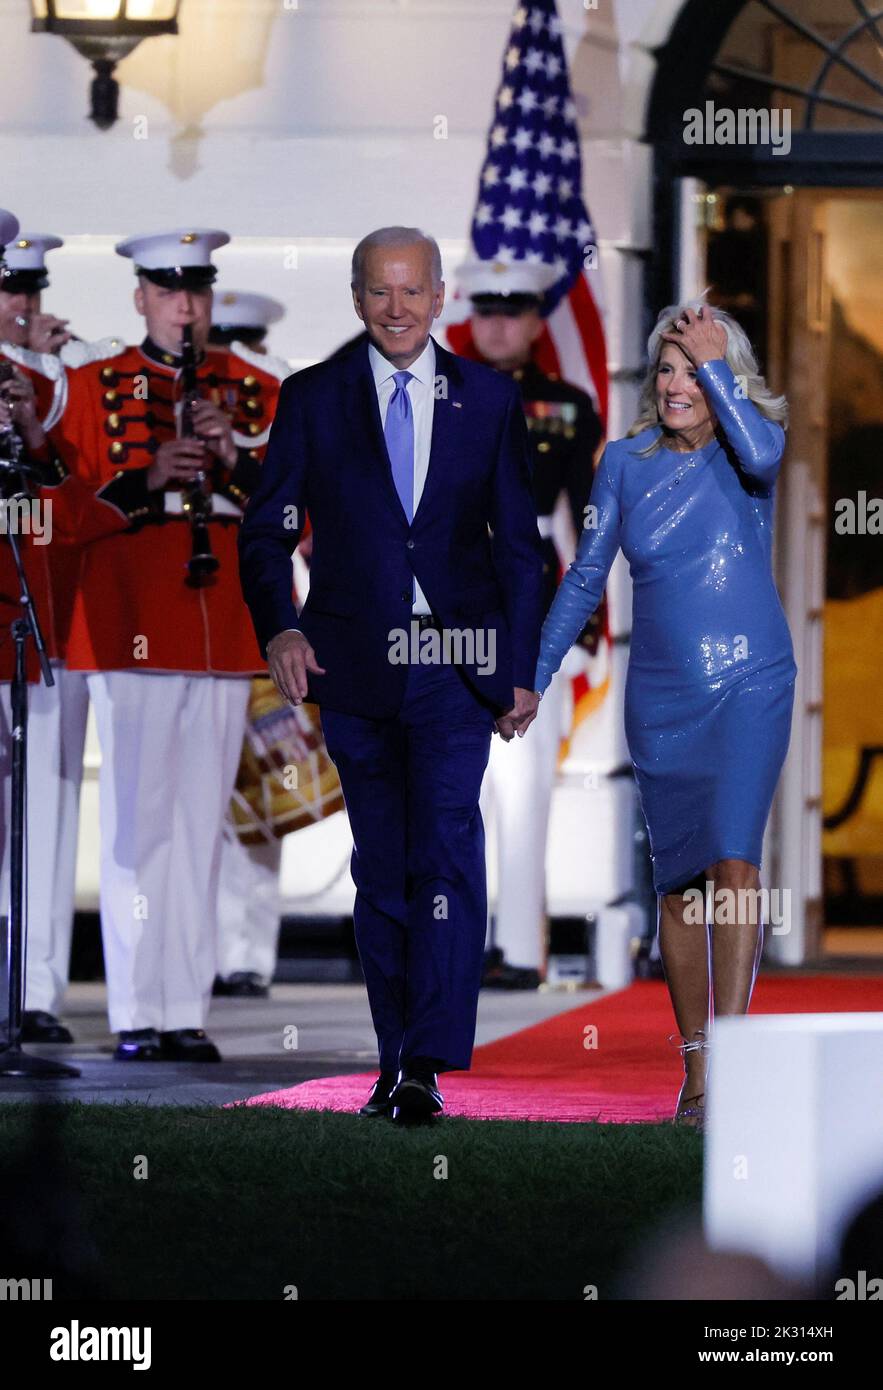 U.S. President Joe Biden and U.S. first lady Jill Biden attend a performance by British rocker Elton John at the White House in Washington, U.S., September 23, 2022. REUTERS/Evelyn Hockstein Stock Photo